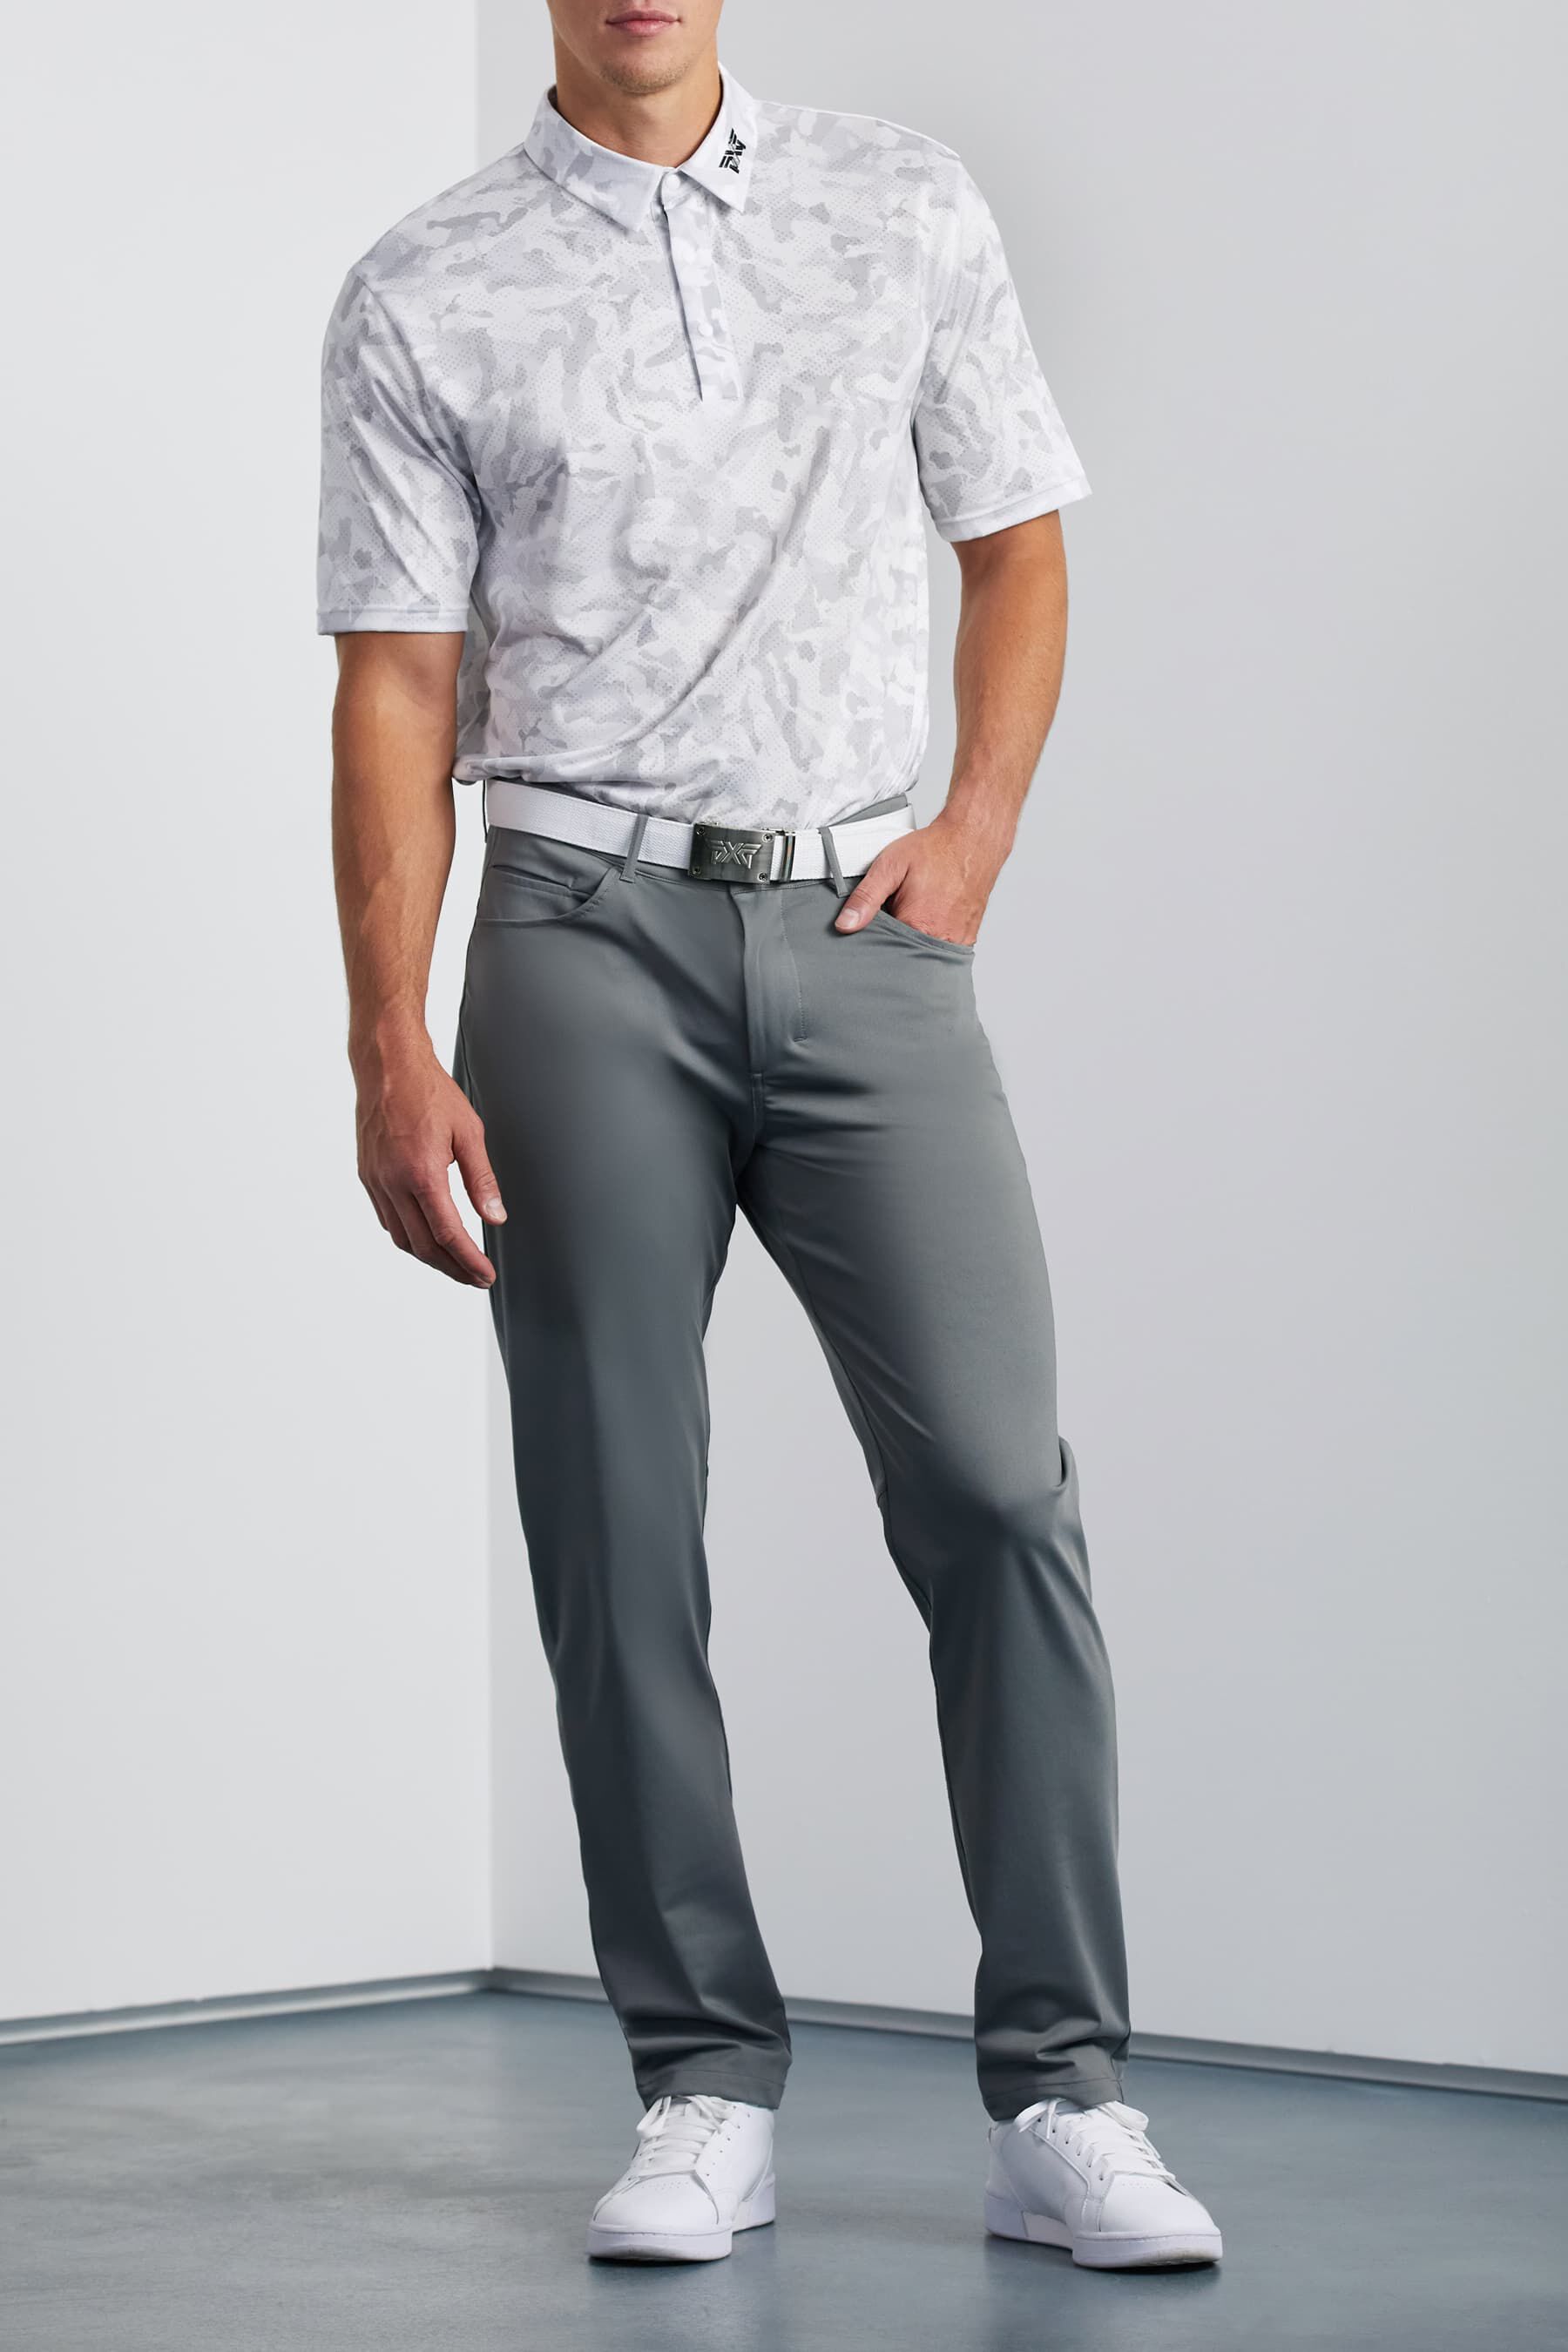 Meta Pant - Charcoal | Grey 5-Pocket Pants | Vuori Clothing